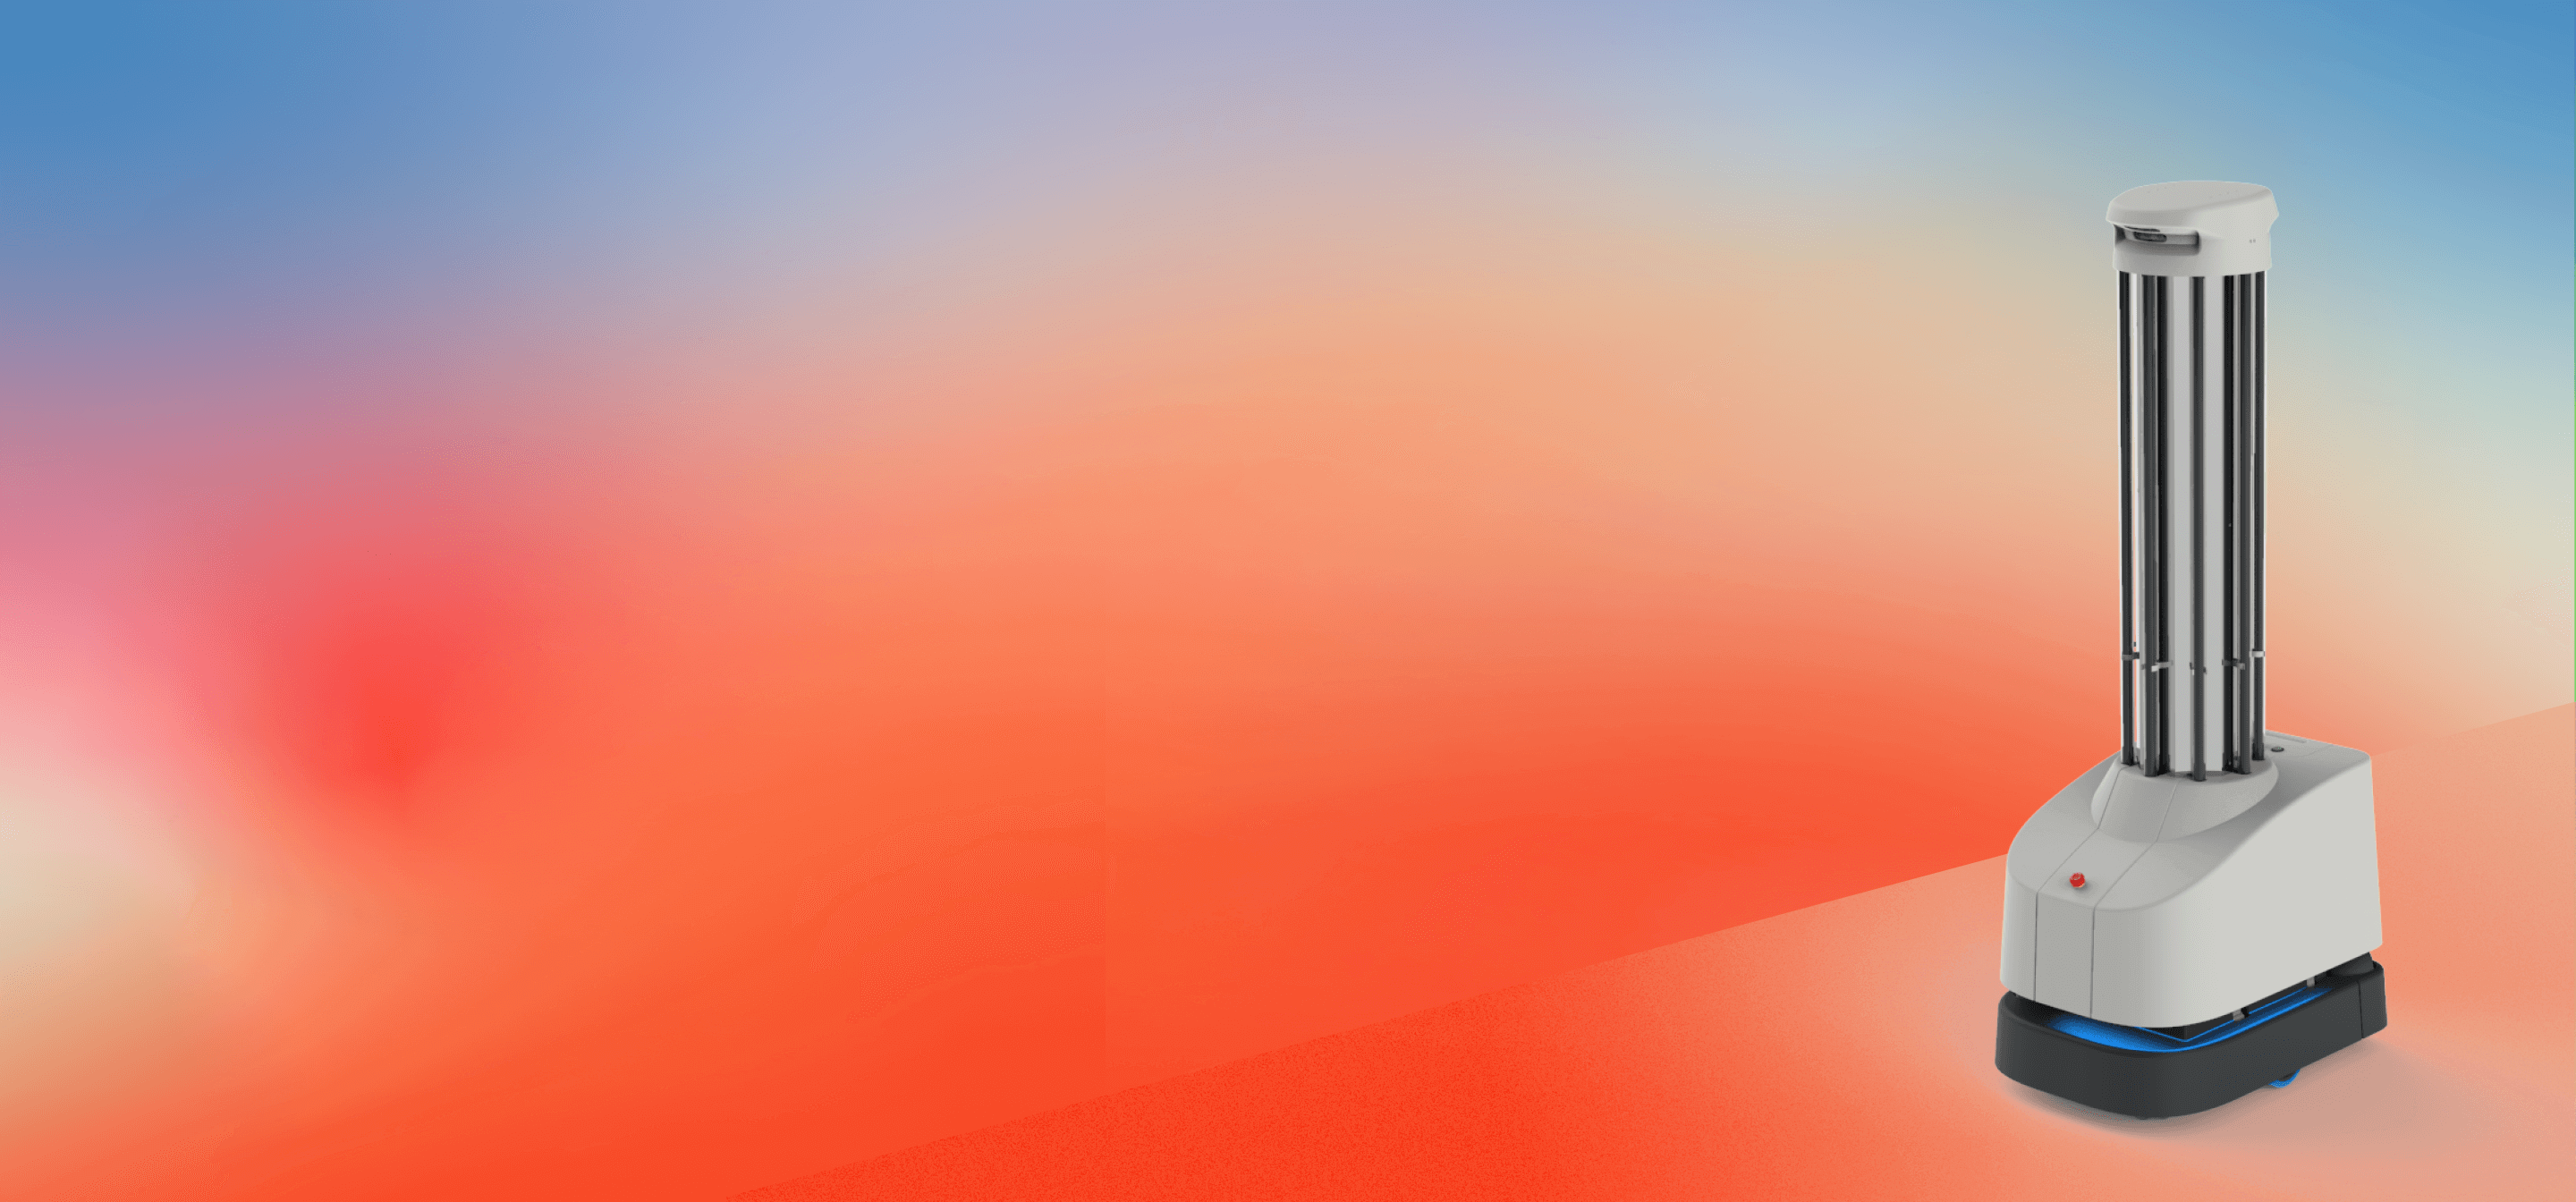 The UVD Robots cruising on a orange gradient background.